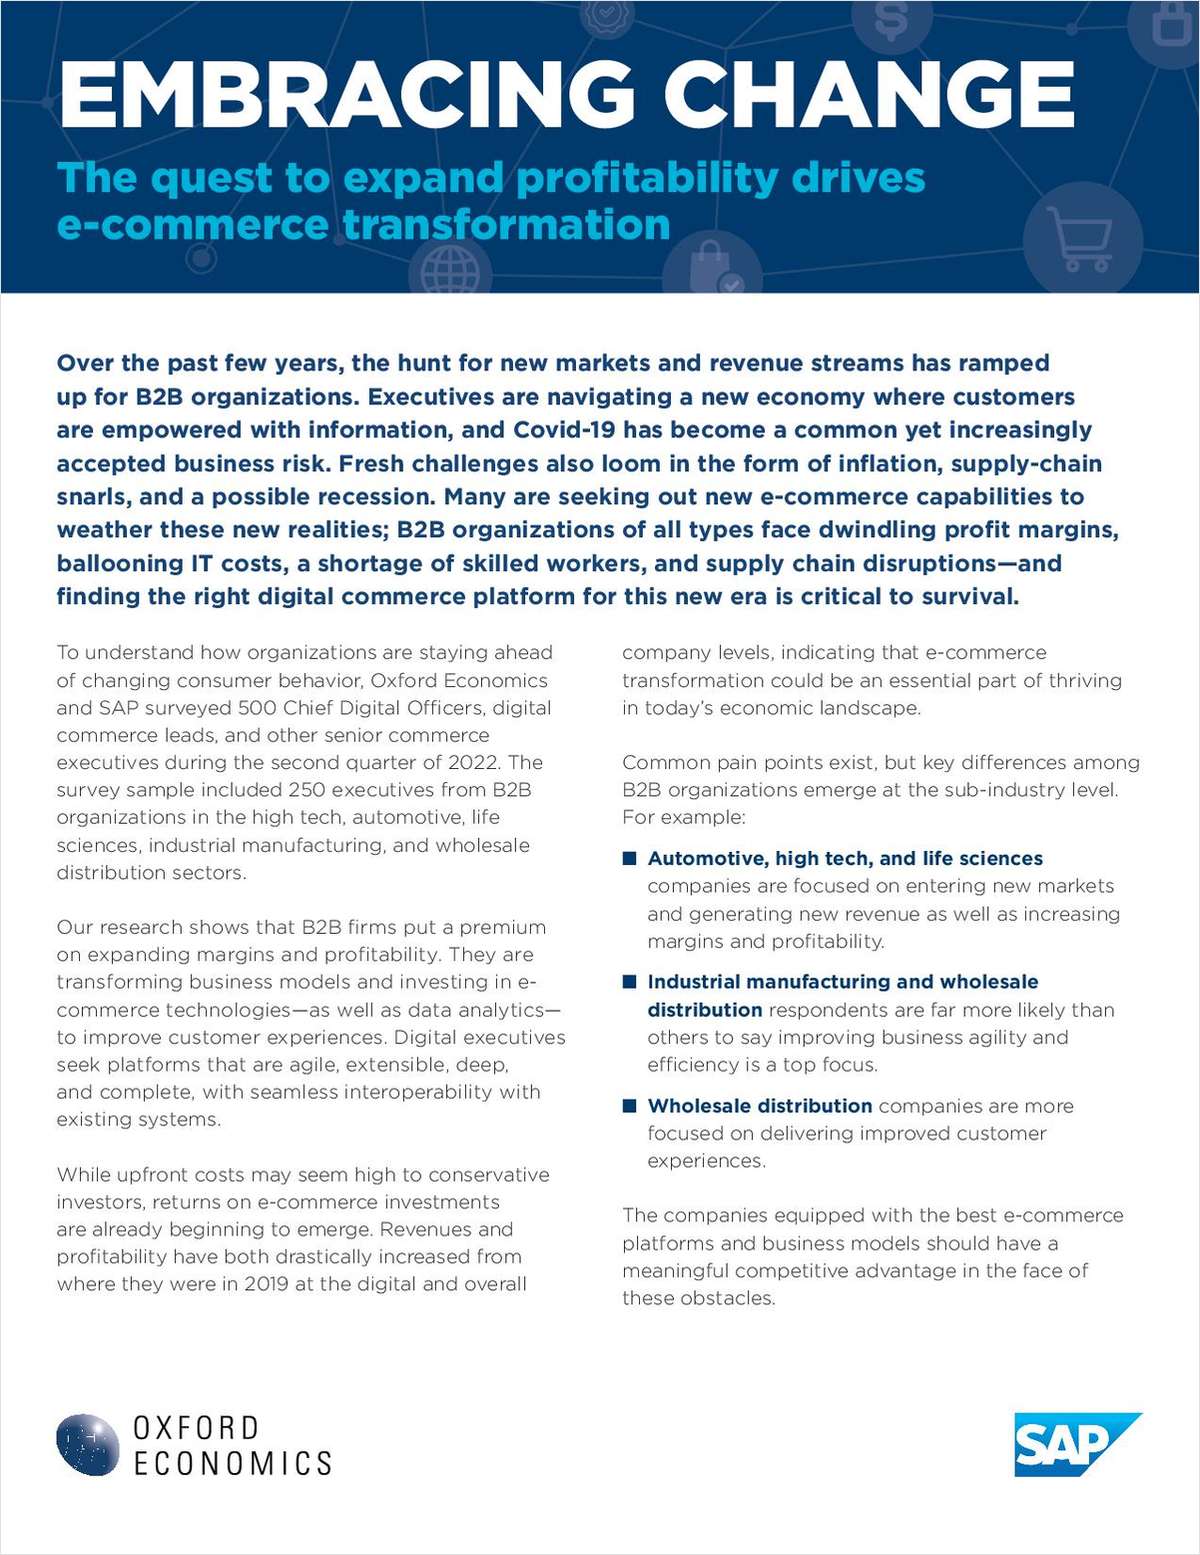 Oxford Economics: Embracing change - The quest to expand profitability drives e-commerce transformation